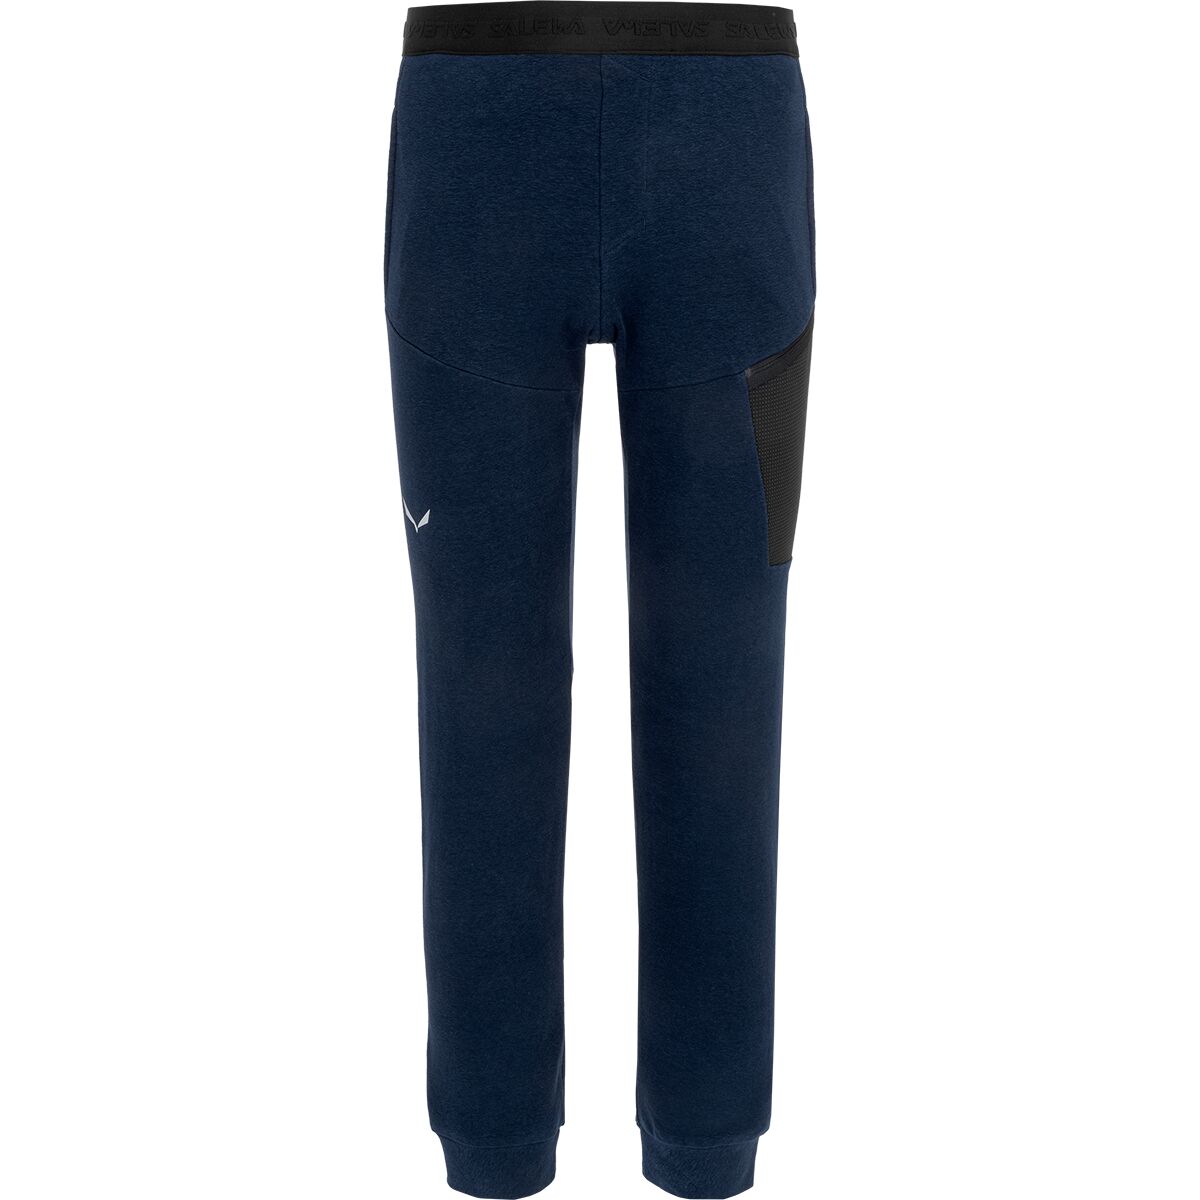 Shop Stylish Hemp Sky Blue Pants for Men  Ecentric